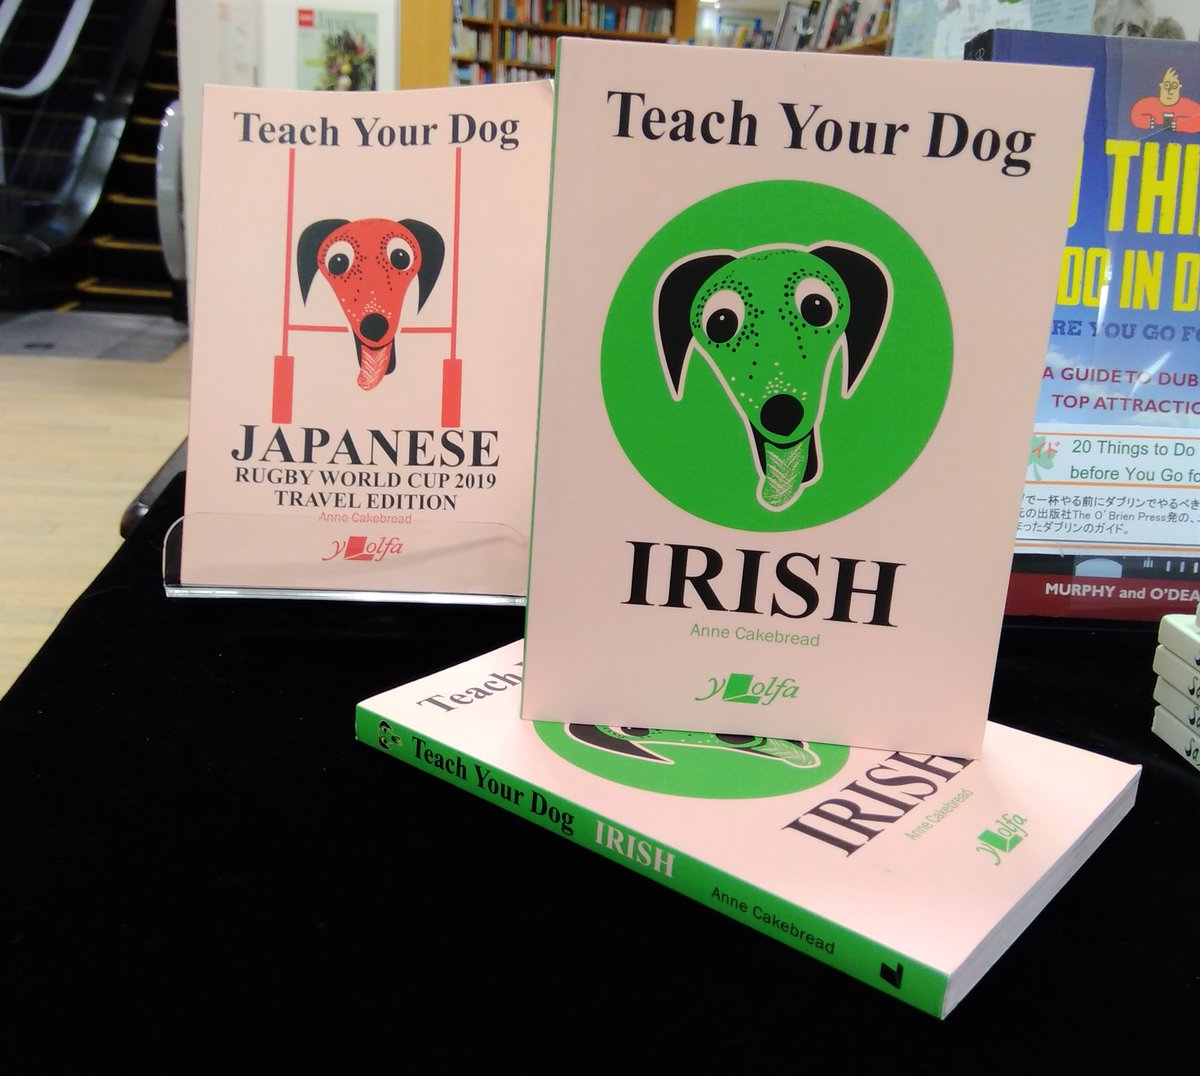 Bookskinokuniyatokyo 洋書専門店 Twitter પર アイルランドフェア 本日入荷した本をご紹介 Teach Your Dog Irish 昨年のrwcに合わせて出版されたteach Your Dog Japanese Rugby World Cup 19 Travel Editionと同じシリーズで ワンちゃんに対して使う